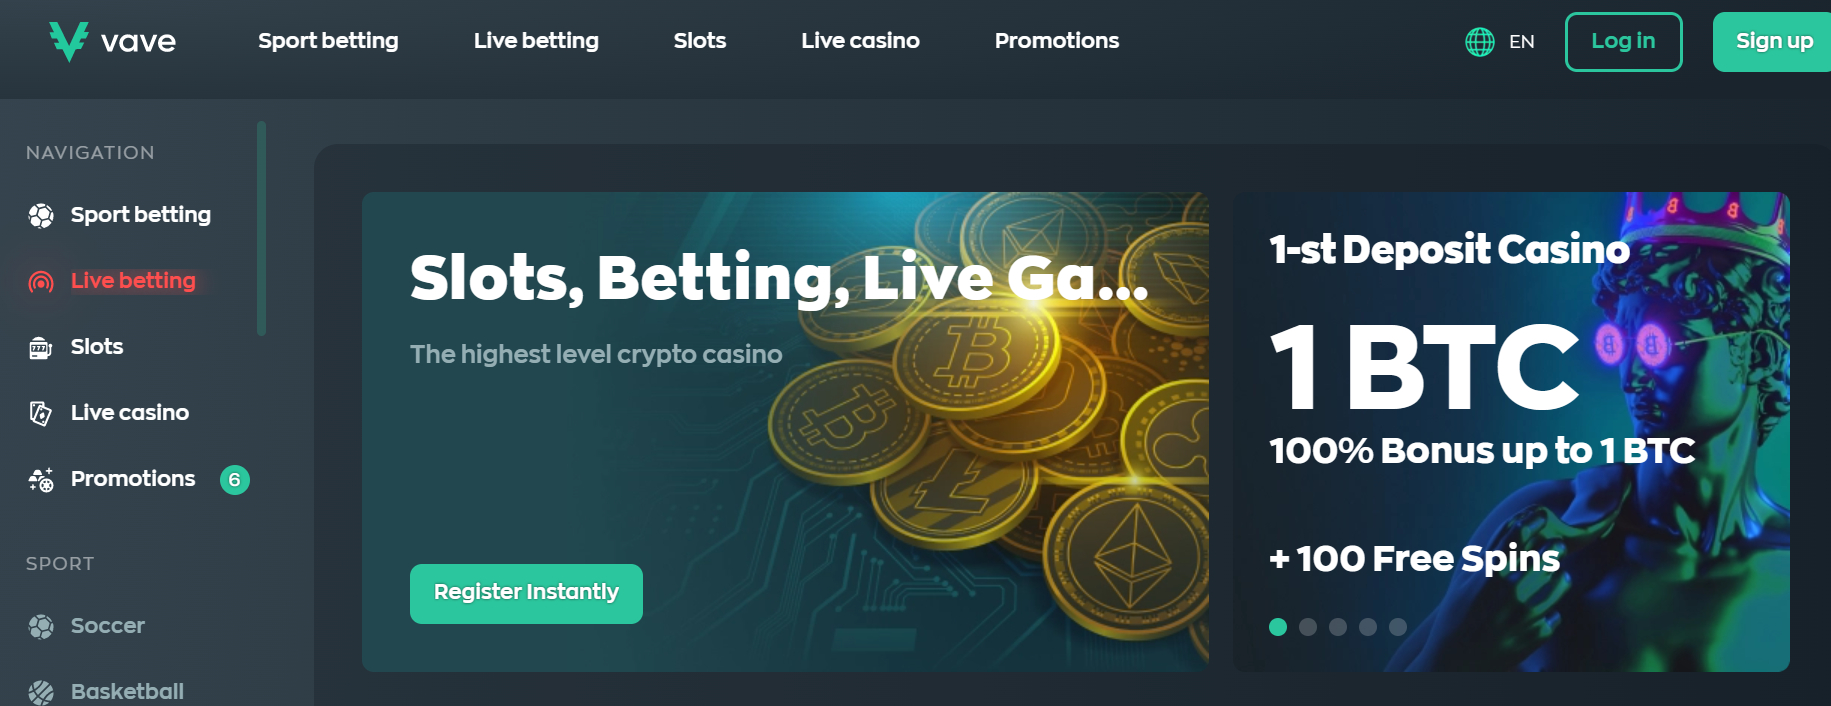 Vave online casino site